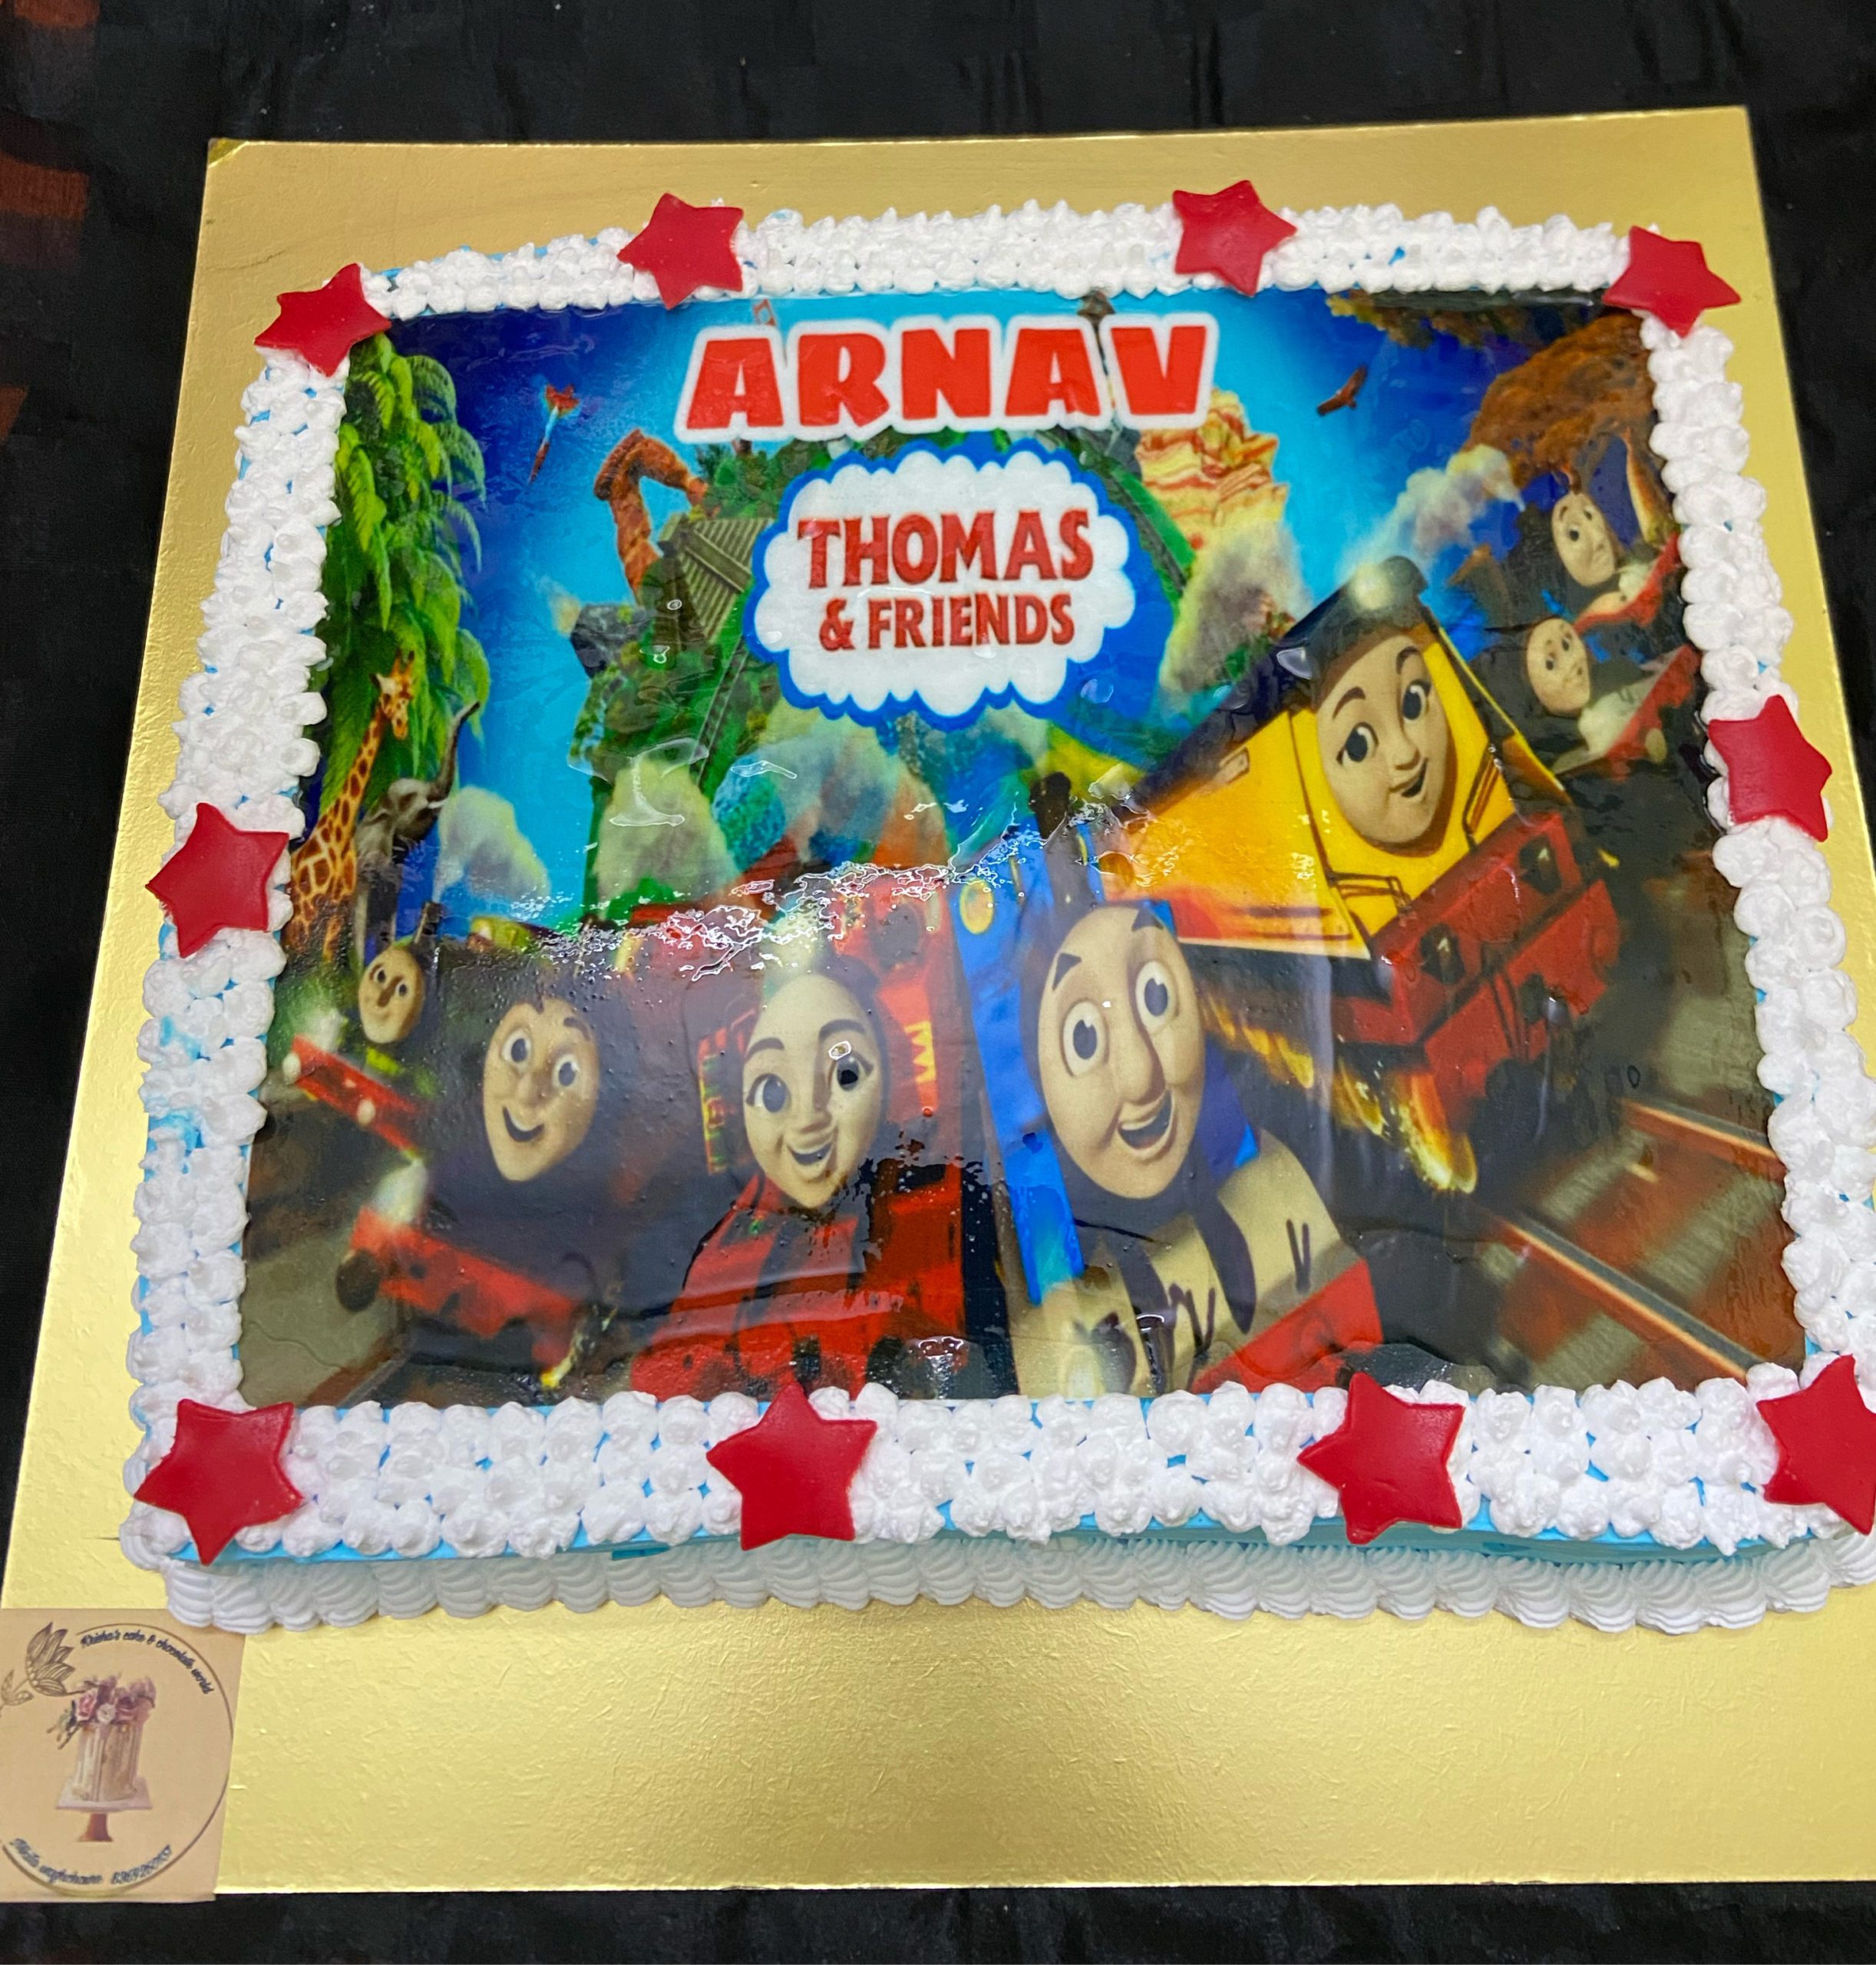 Thomas toy train cake Designs, Images, Price Near Me